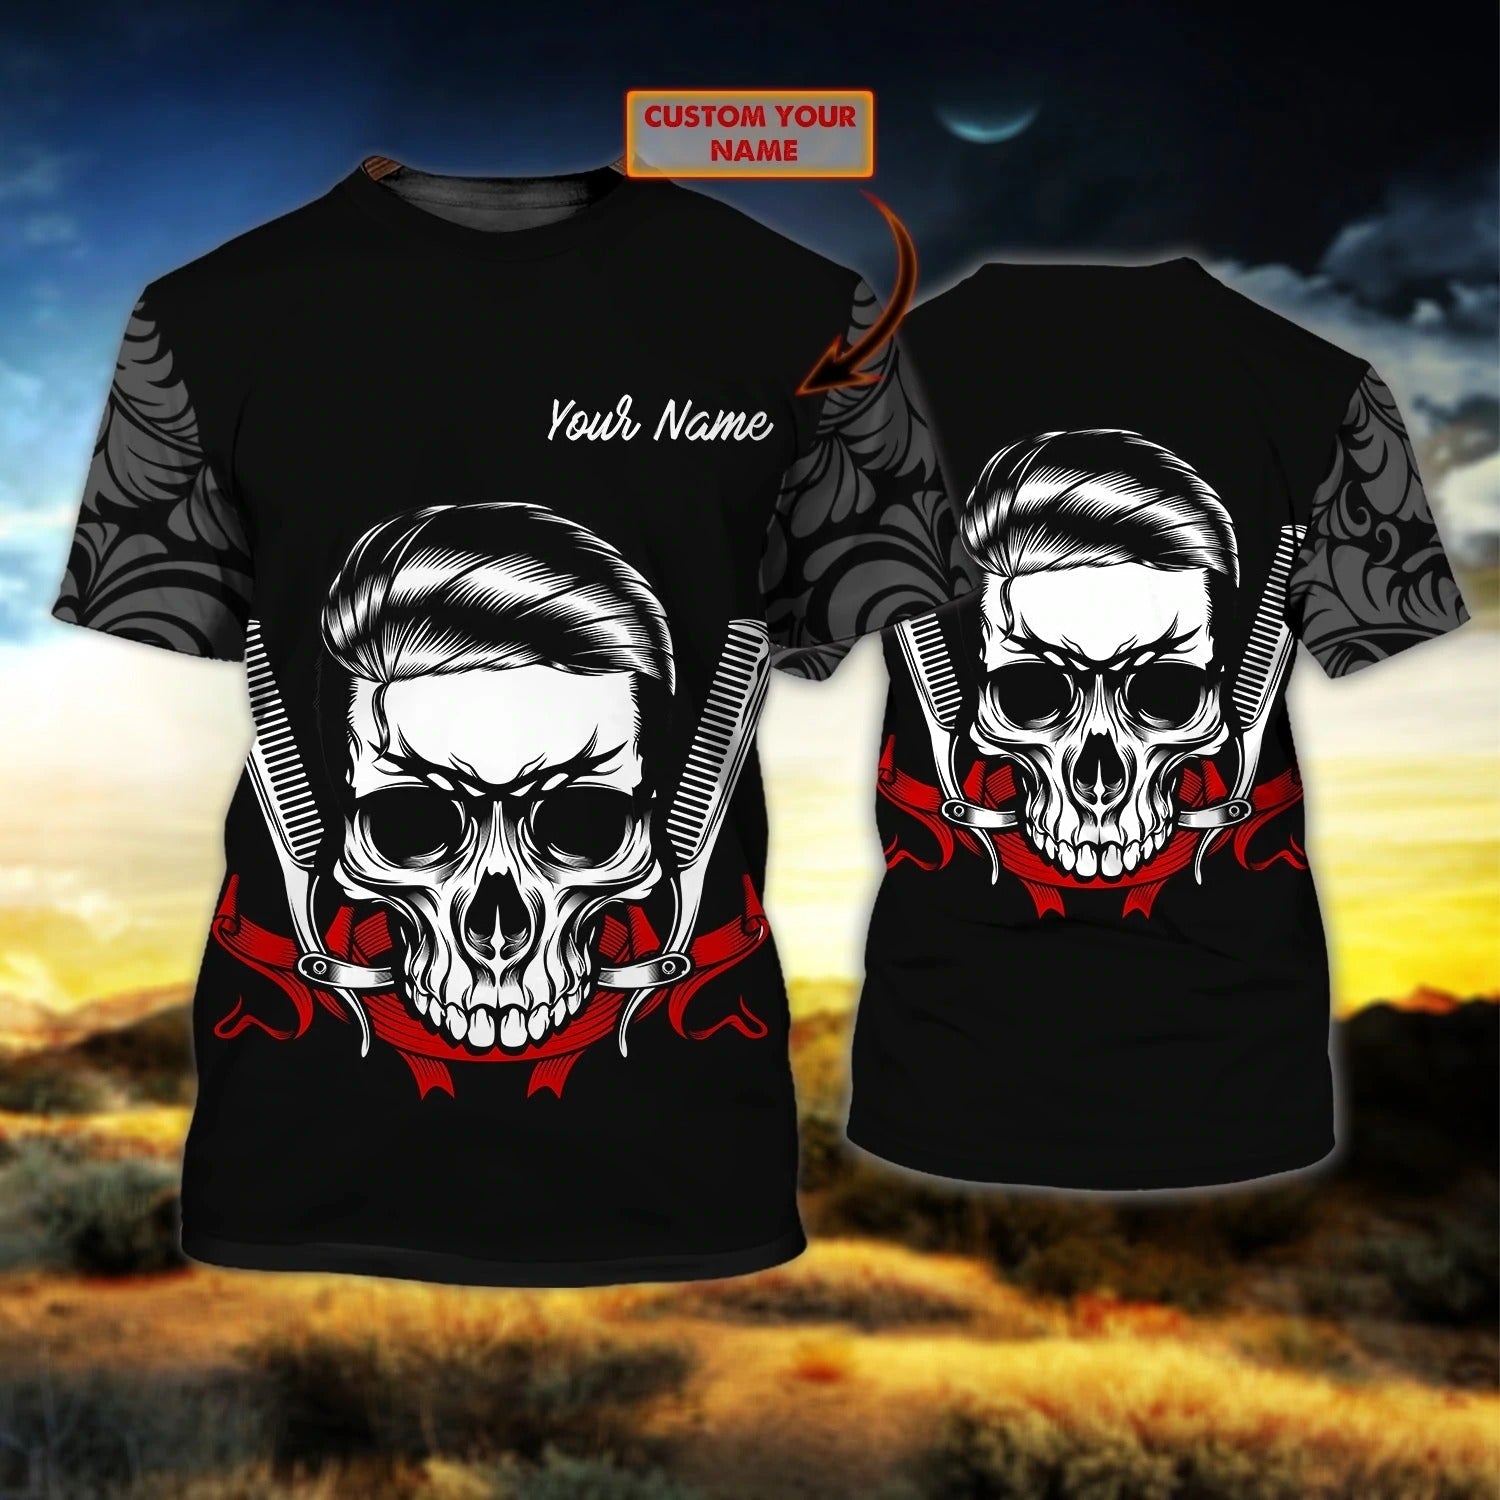 Personalized Skull Barber Tshirt/ 3D Full Printed Barber Skull Shirts For Him/ Gift To Barber Man